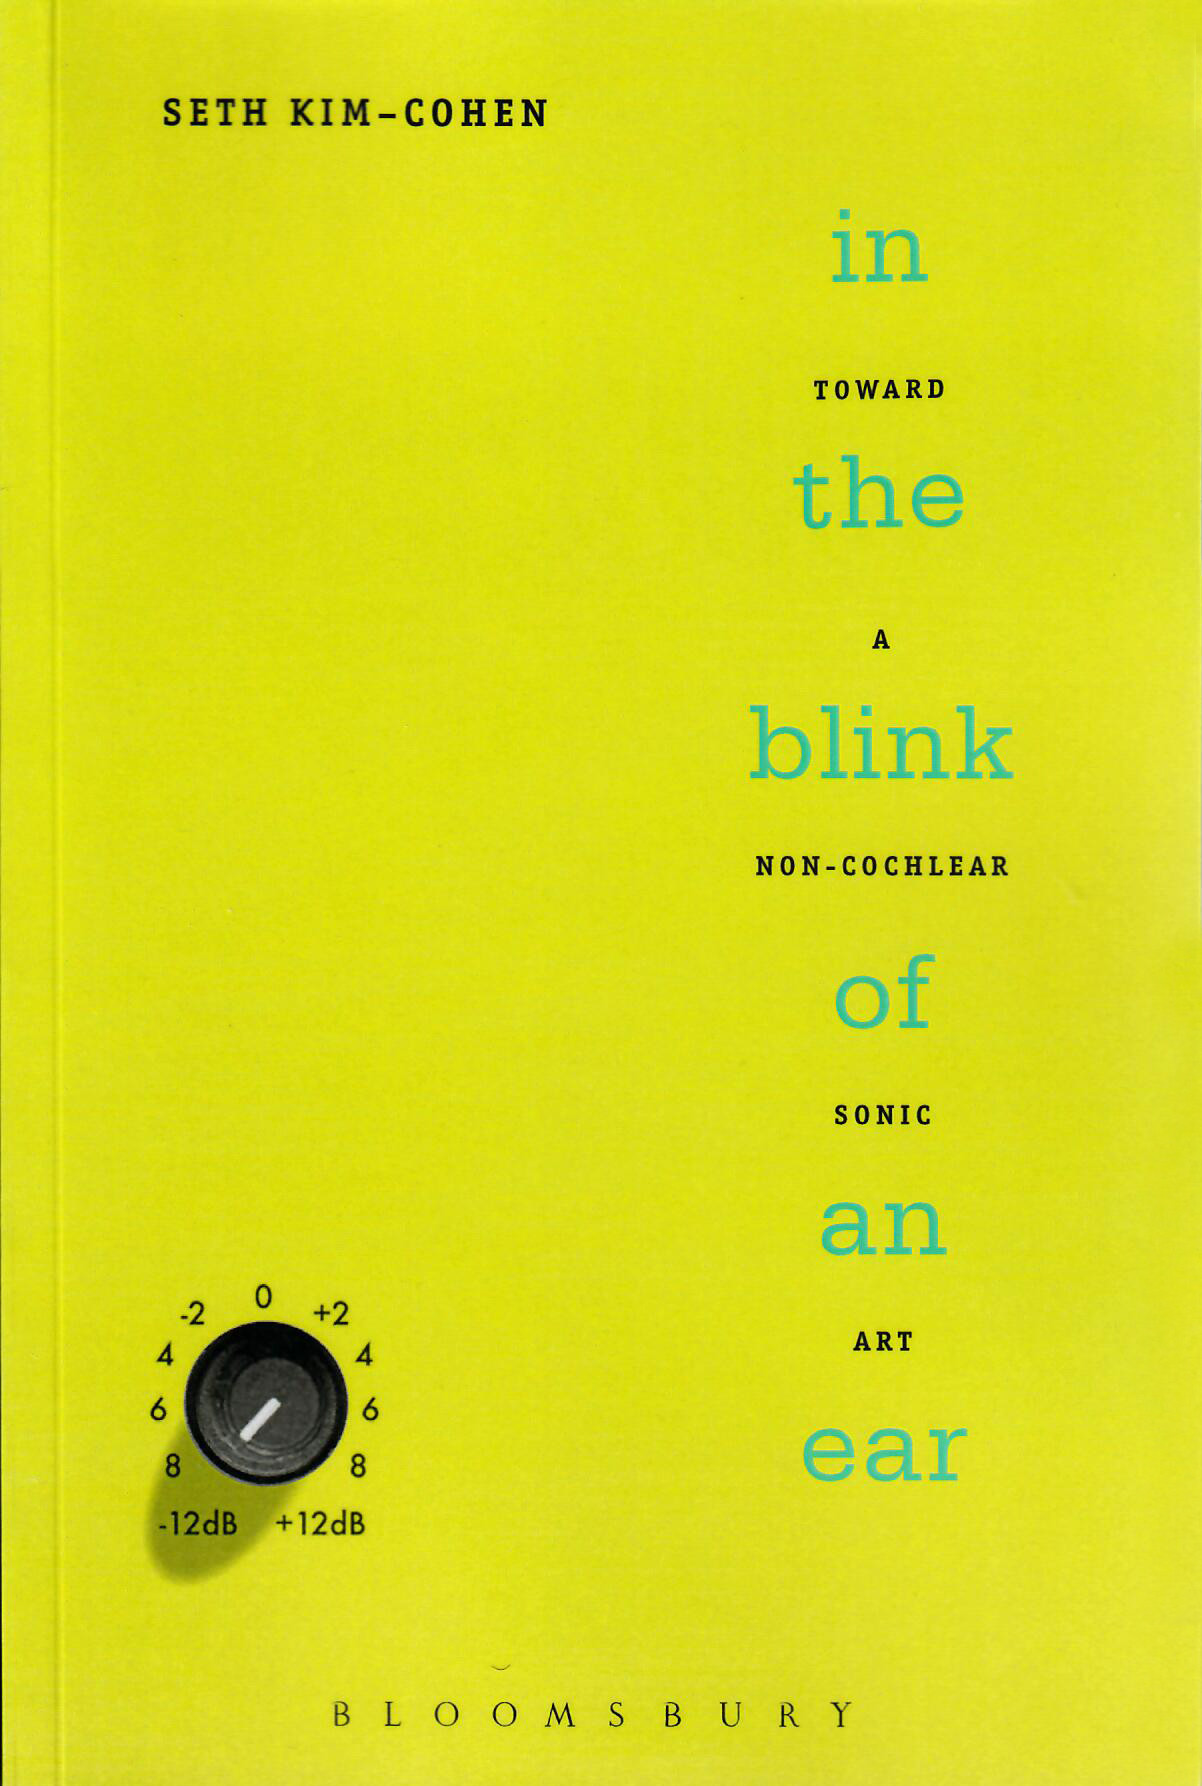 Seth Kim-Cohen. In the Blink of an Ear: Toward a Non-Cochlear Sound Art, Continuum, 2009